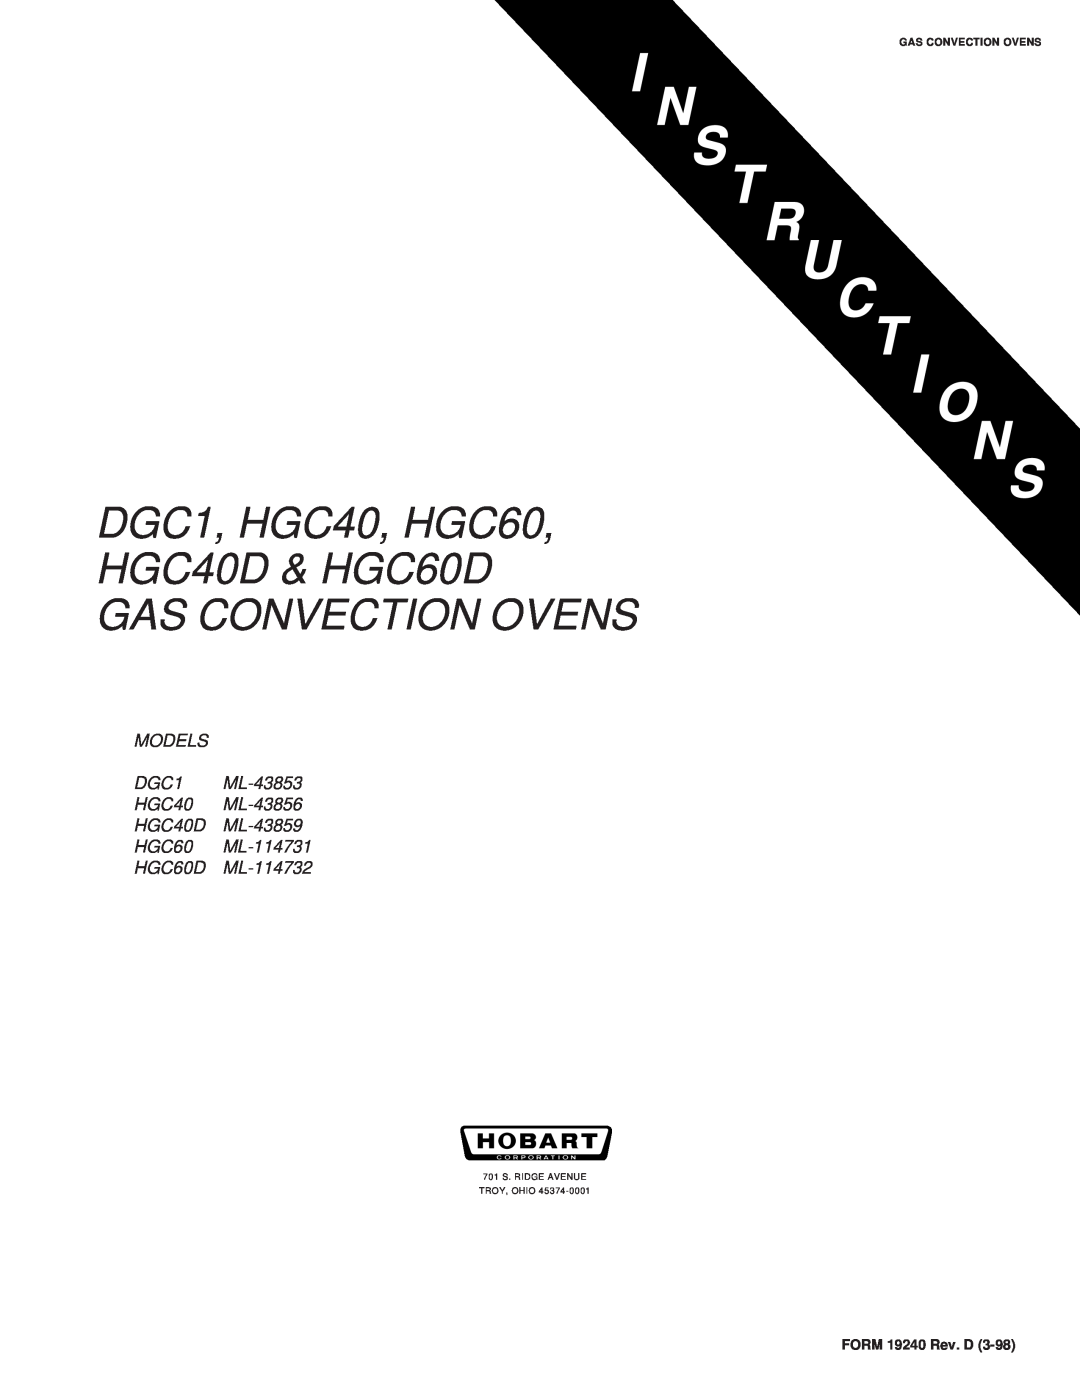 Hobart manual DGC1, HGC40, HGC60 HGC40D & HGC60D GAS CONVECTION OVENS, HGC60D ML-114732, FORM 19240 Rev. D 